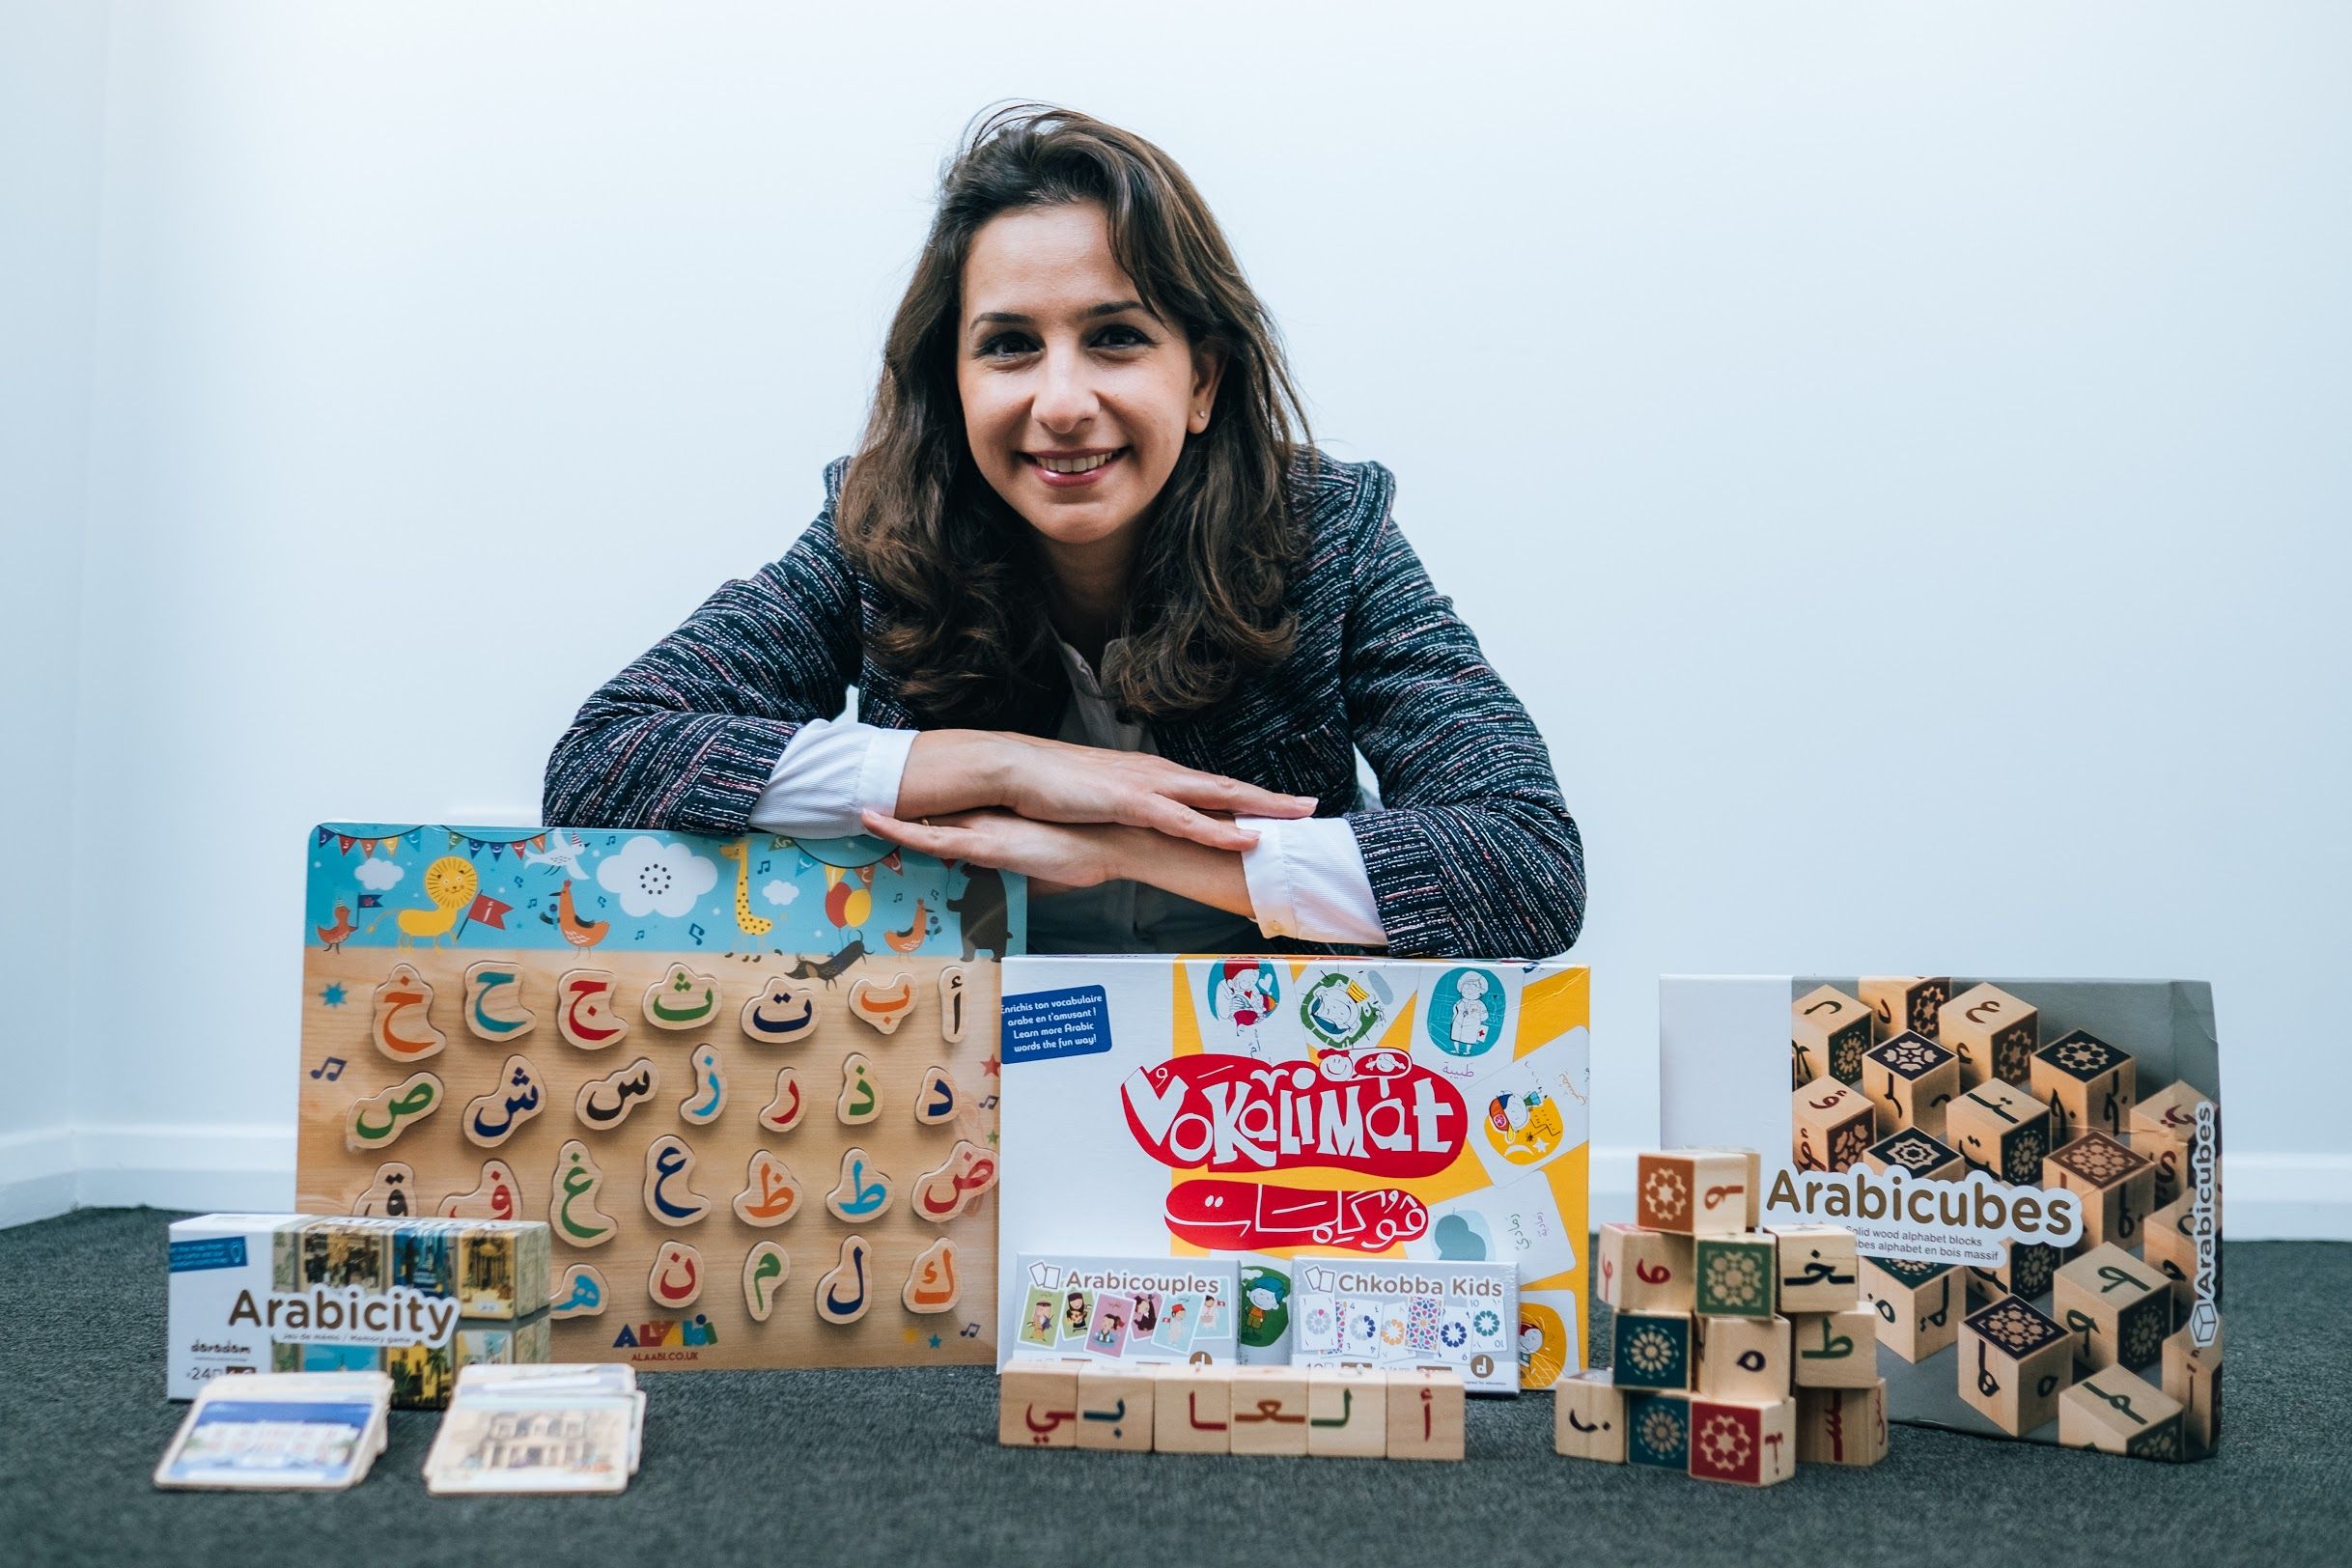 Hala Ghraib encourages teaching Arabic through play